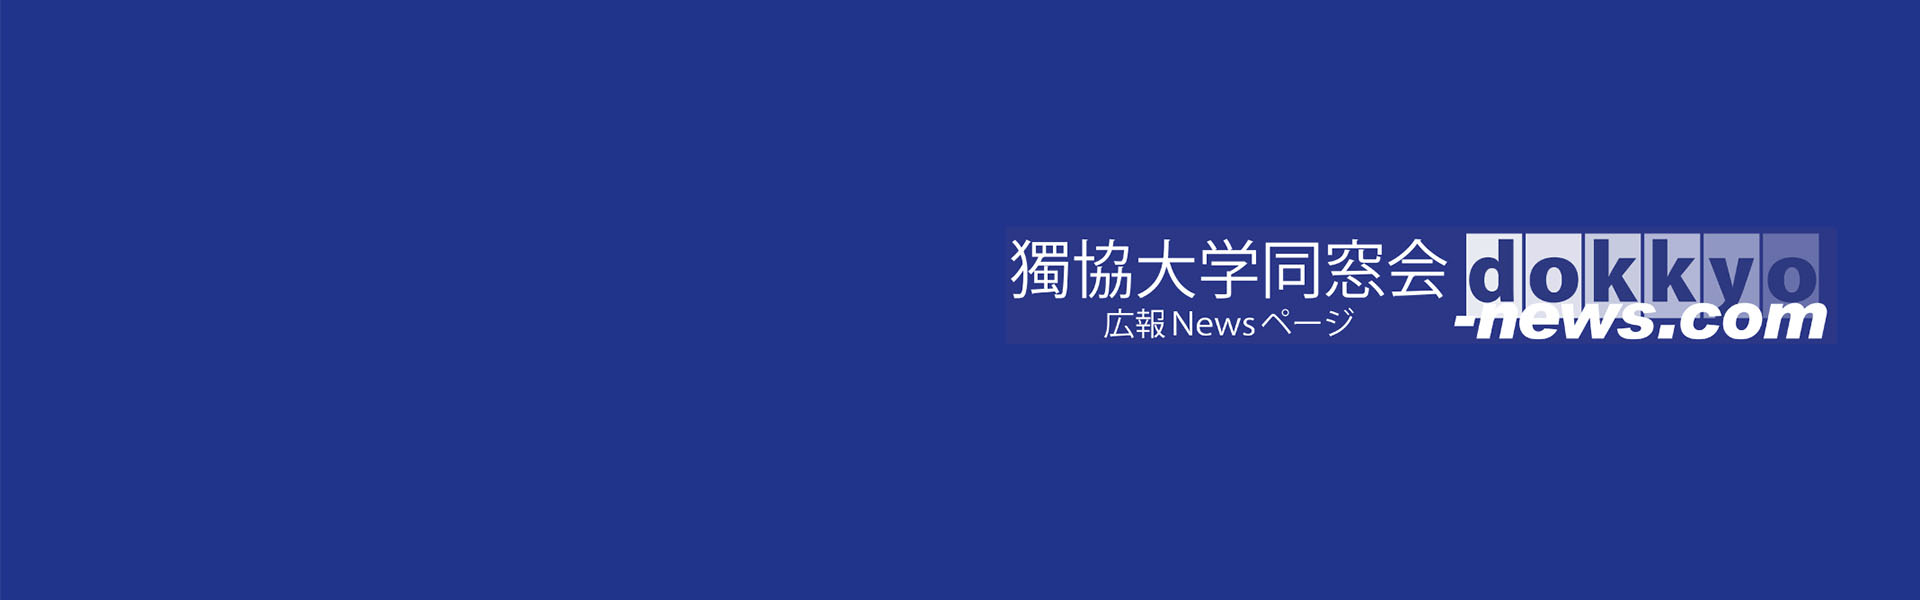 News For All Dokkyo Alumni 獨協大学同窓会広報news